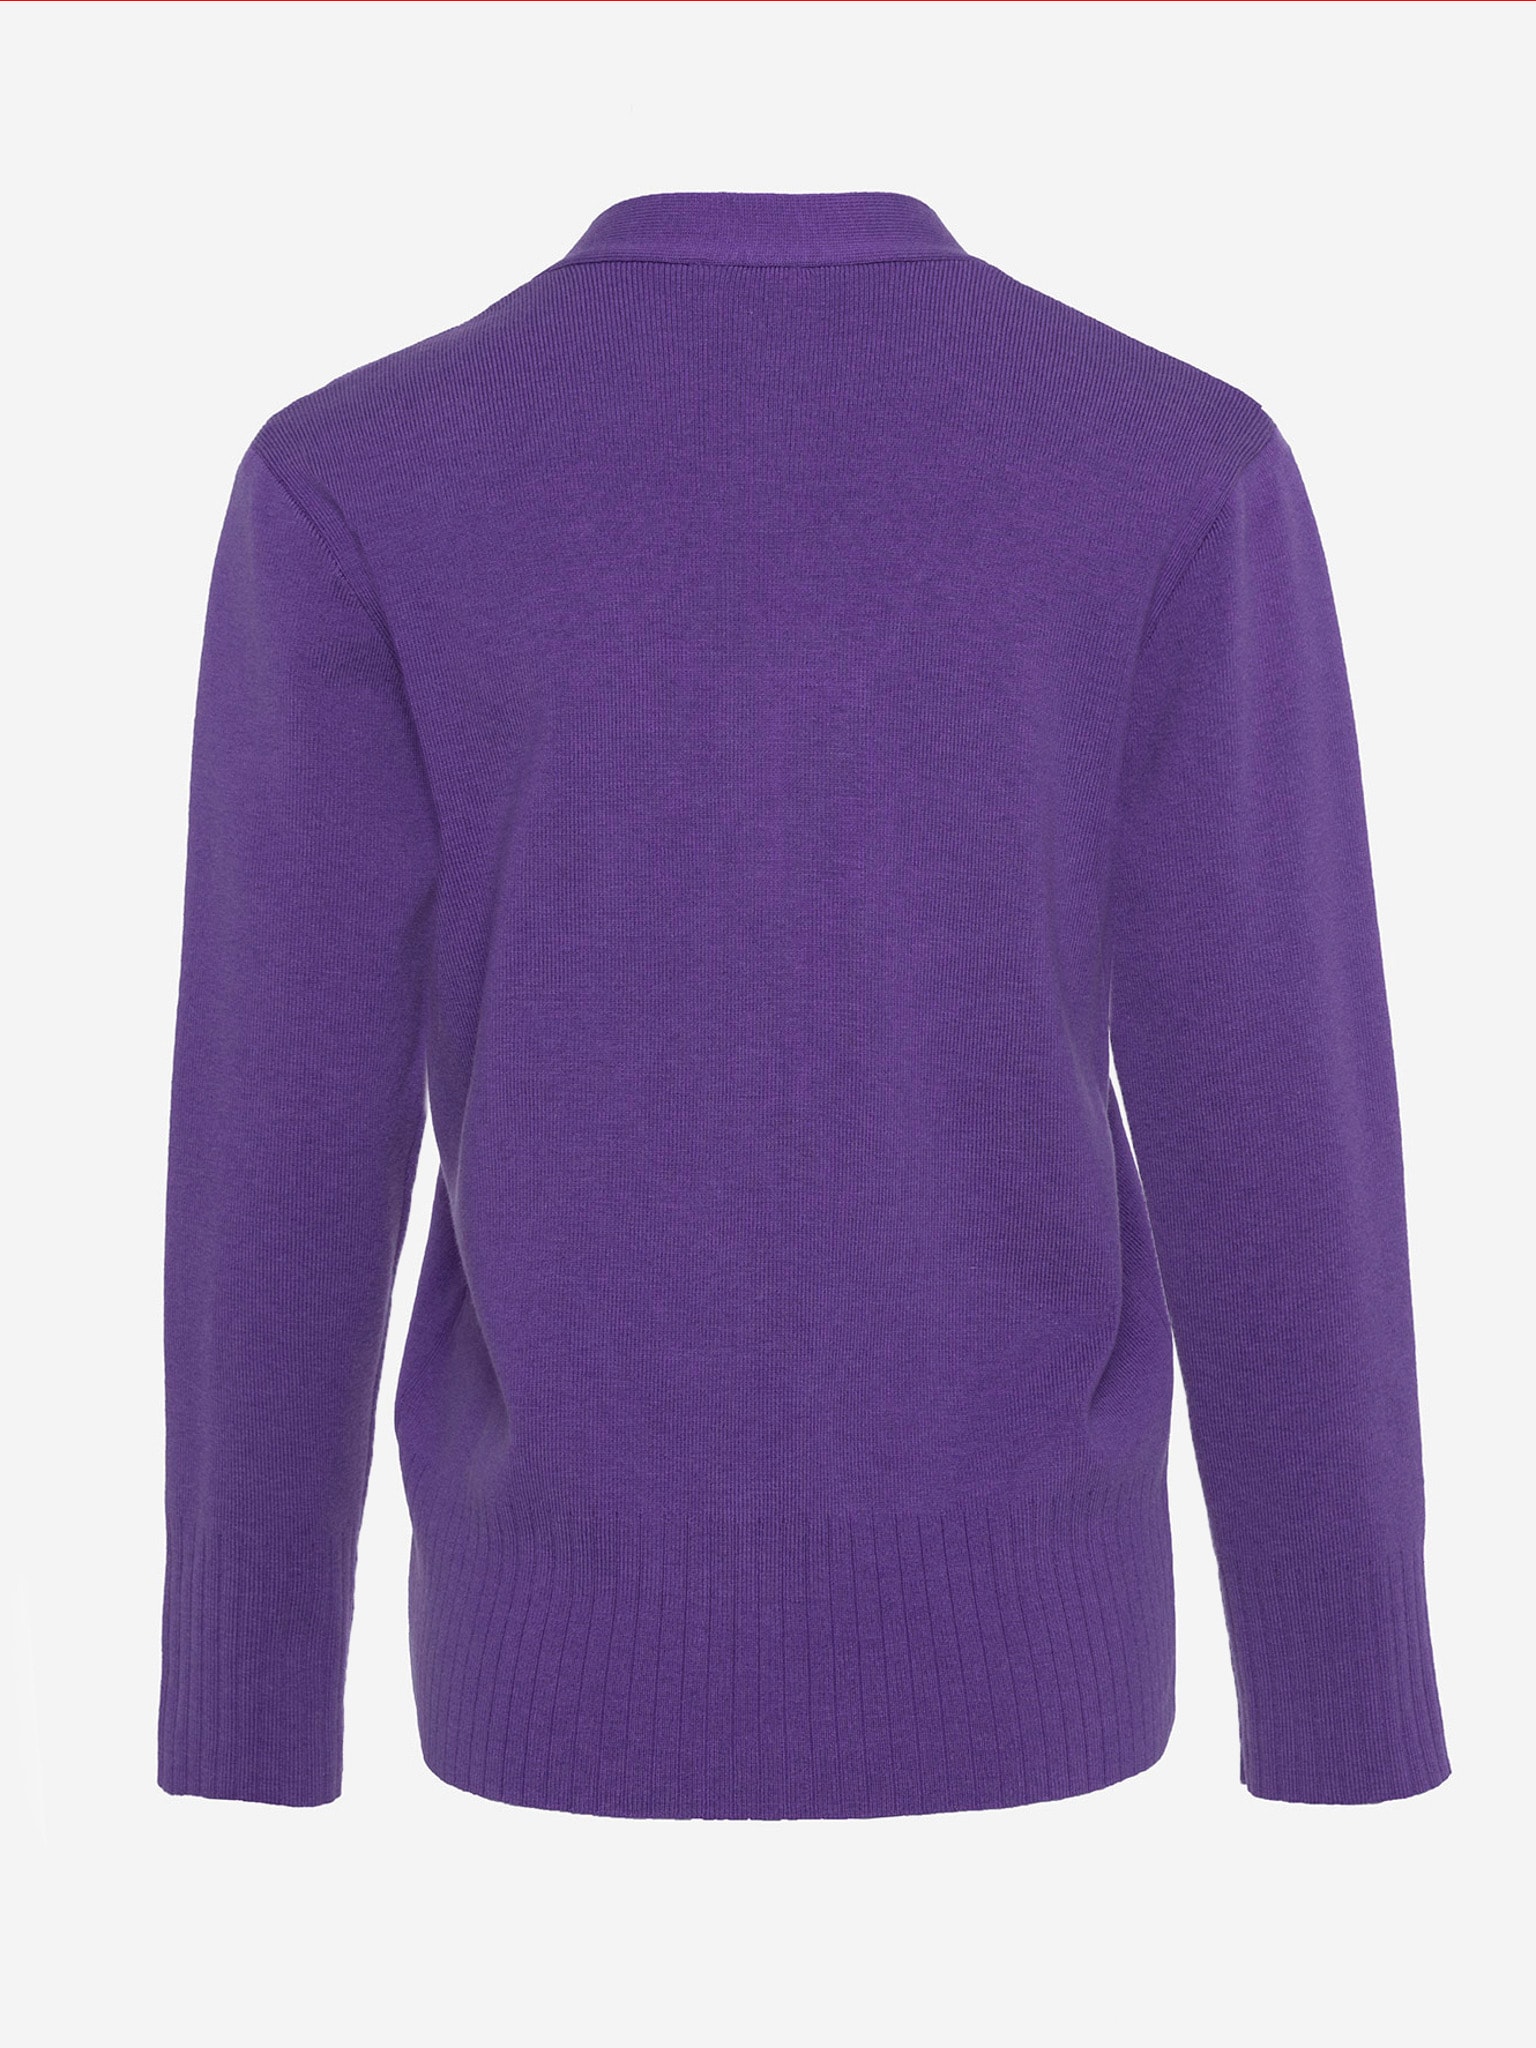 Smooth knit straight cardigan :: LICHI - Online fashion store